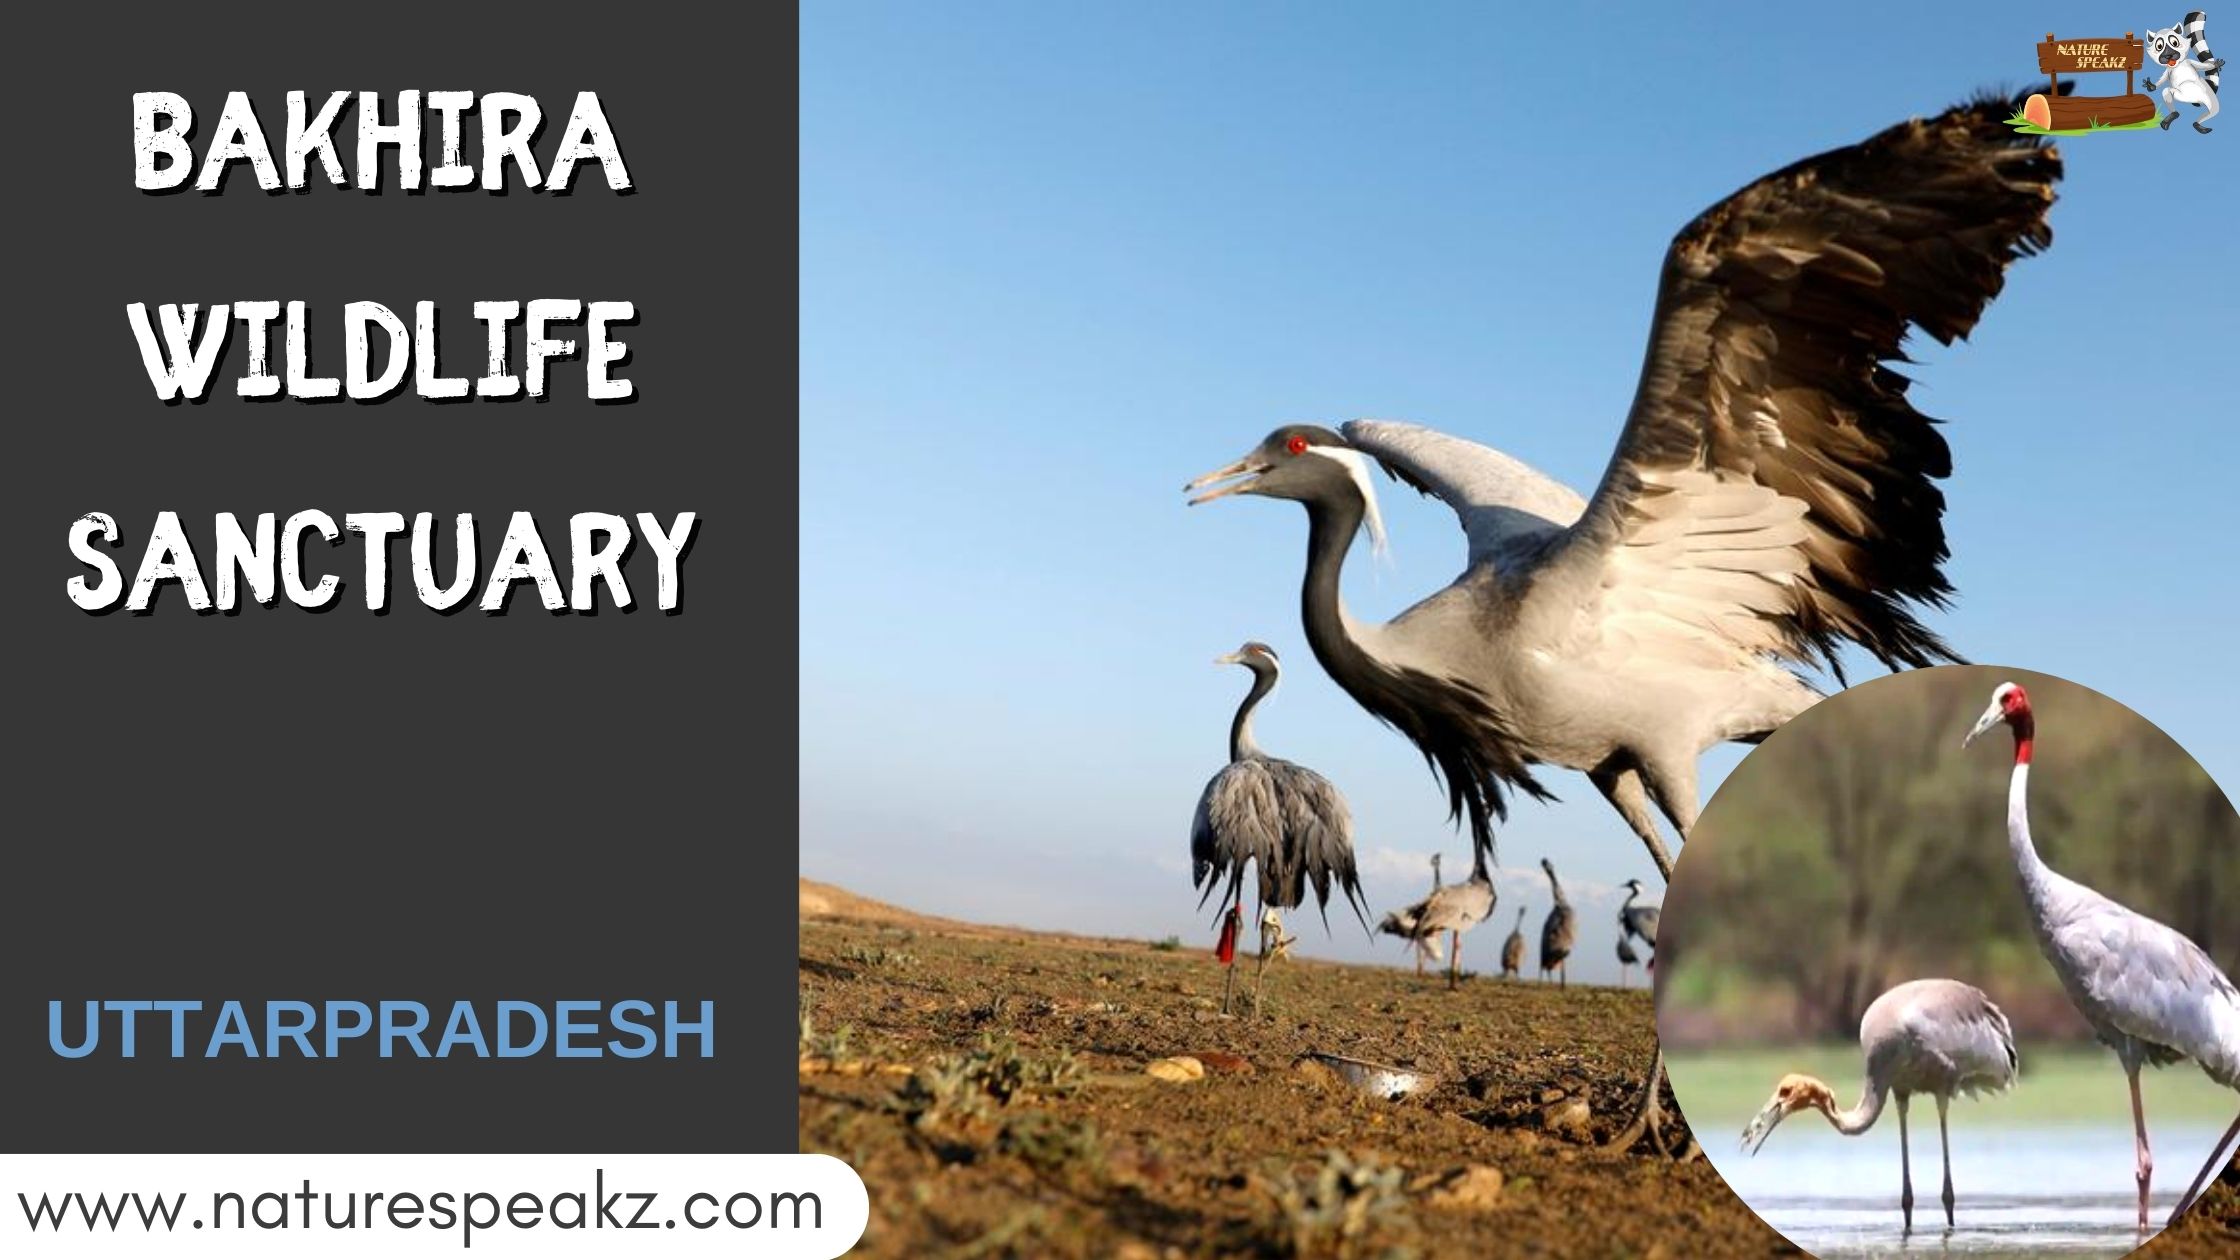 Bakhira Wildlife Sanctuary – Uttarpradesh